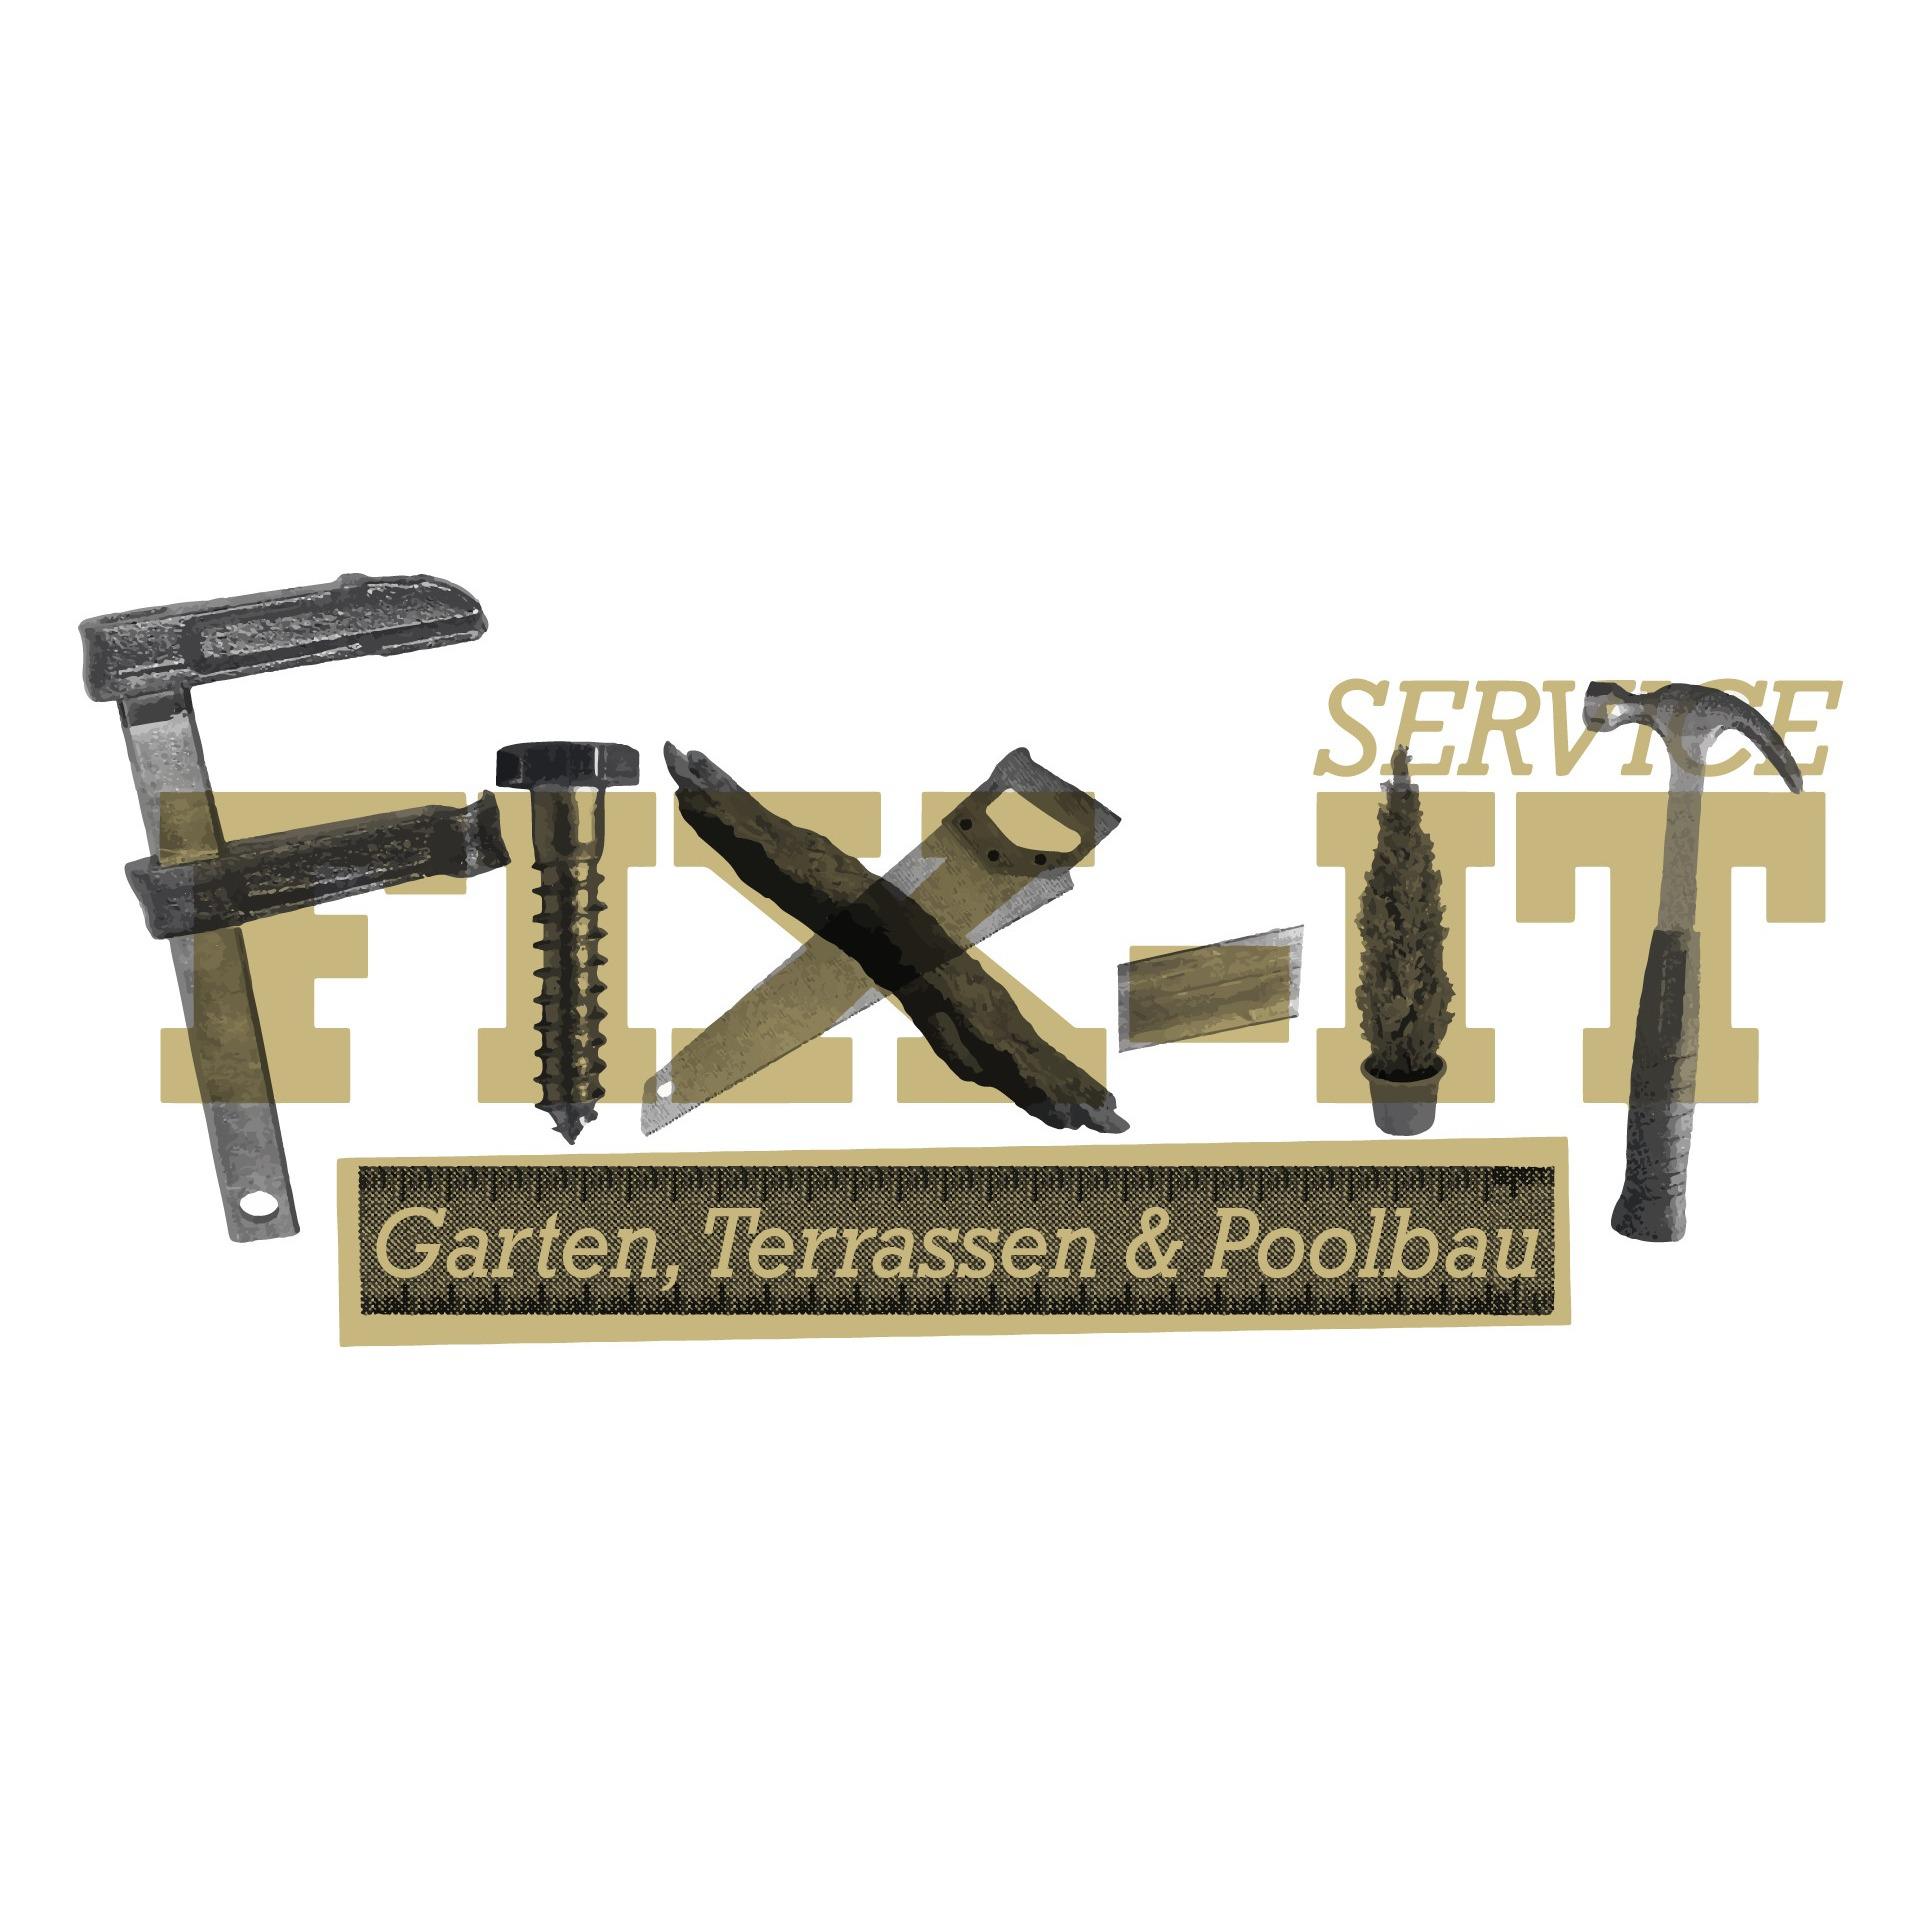 FIX IT SERVICE Garten- Landschafts, Terrassen & Poolbau Logo